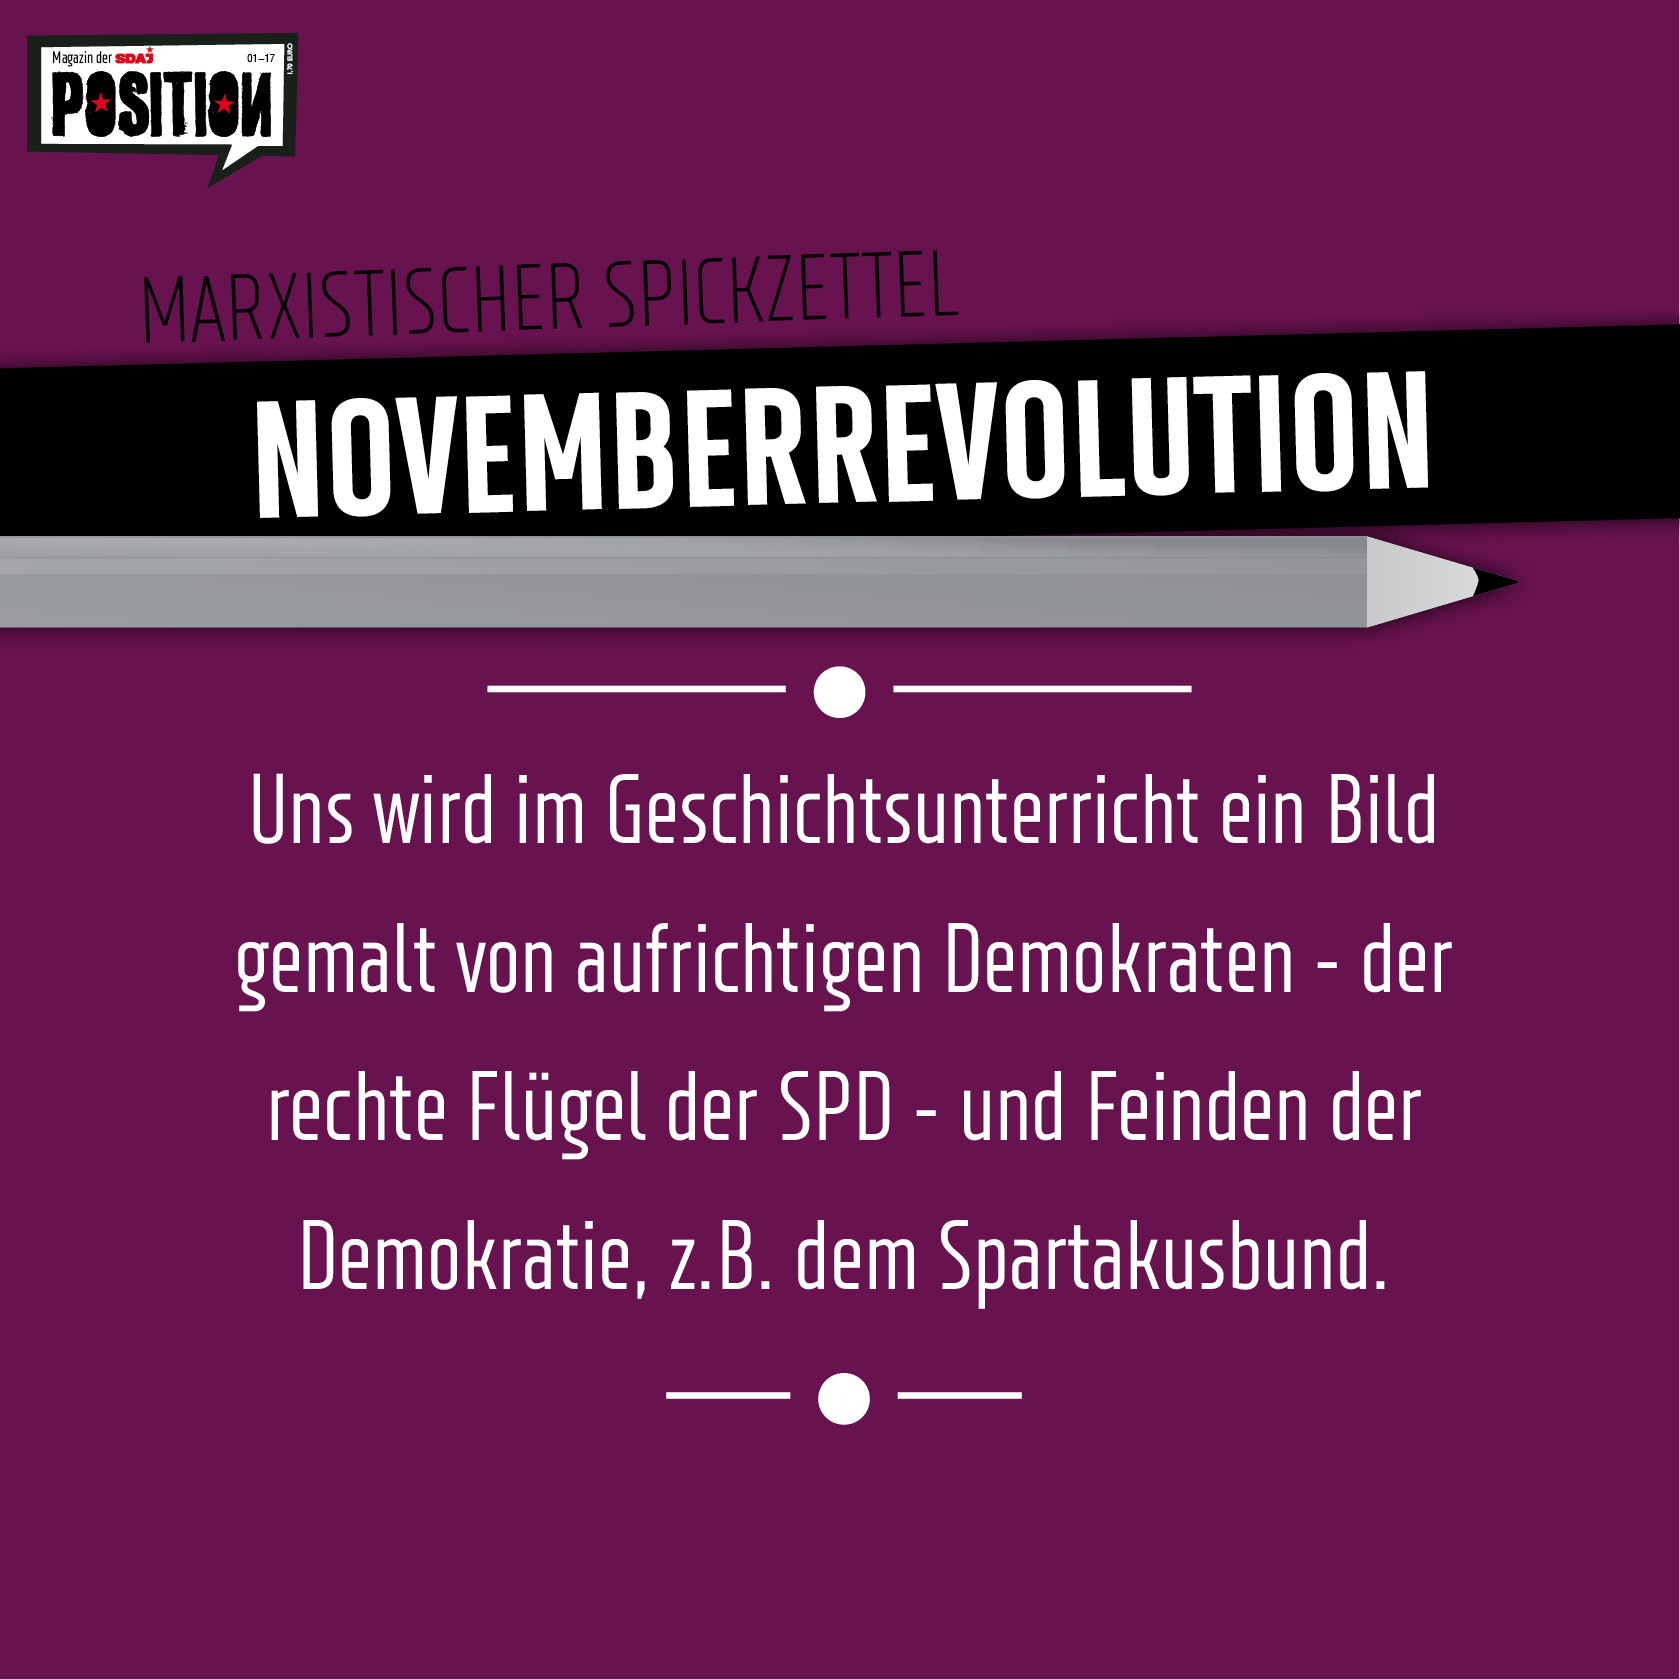 Marxistischer Spickzettel: Novemberrevolution